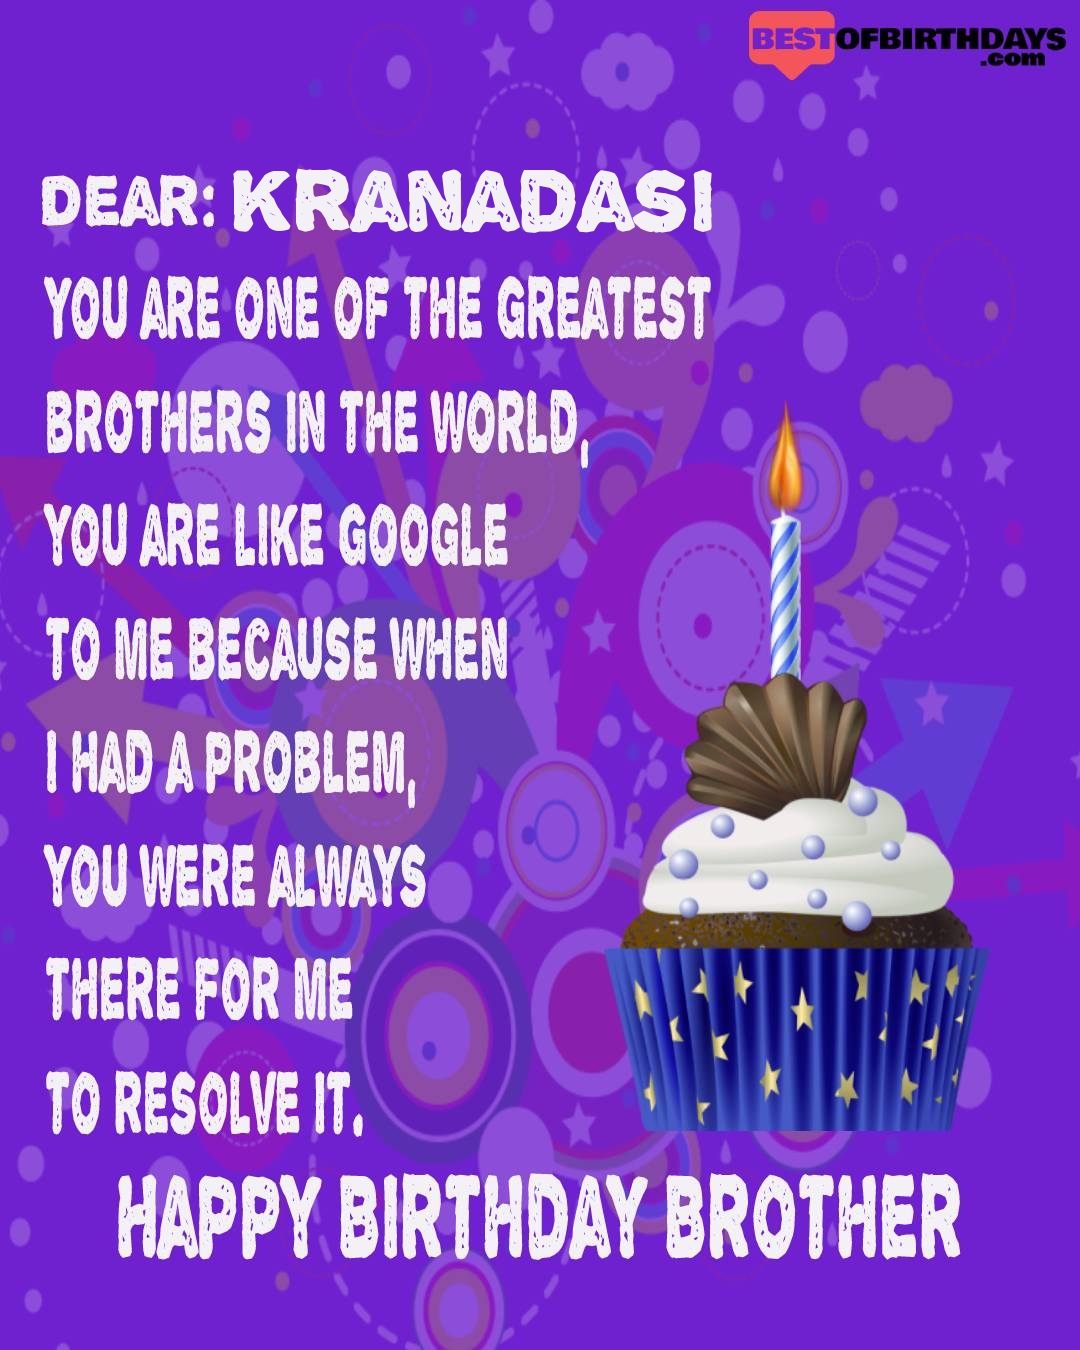 Happy birthday kranadasi bhai brother bro